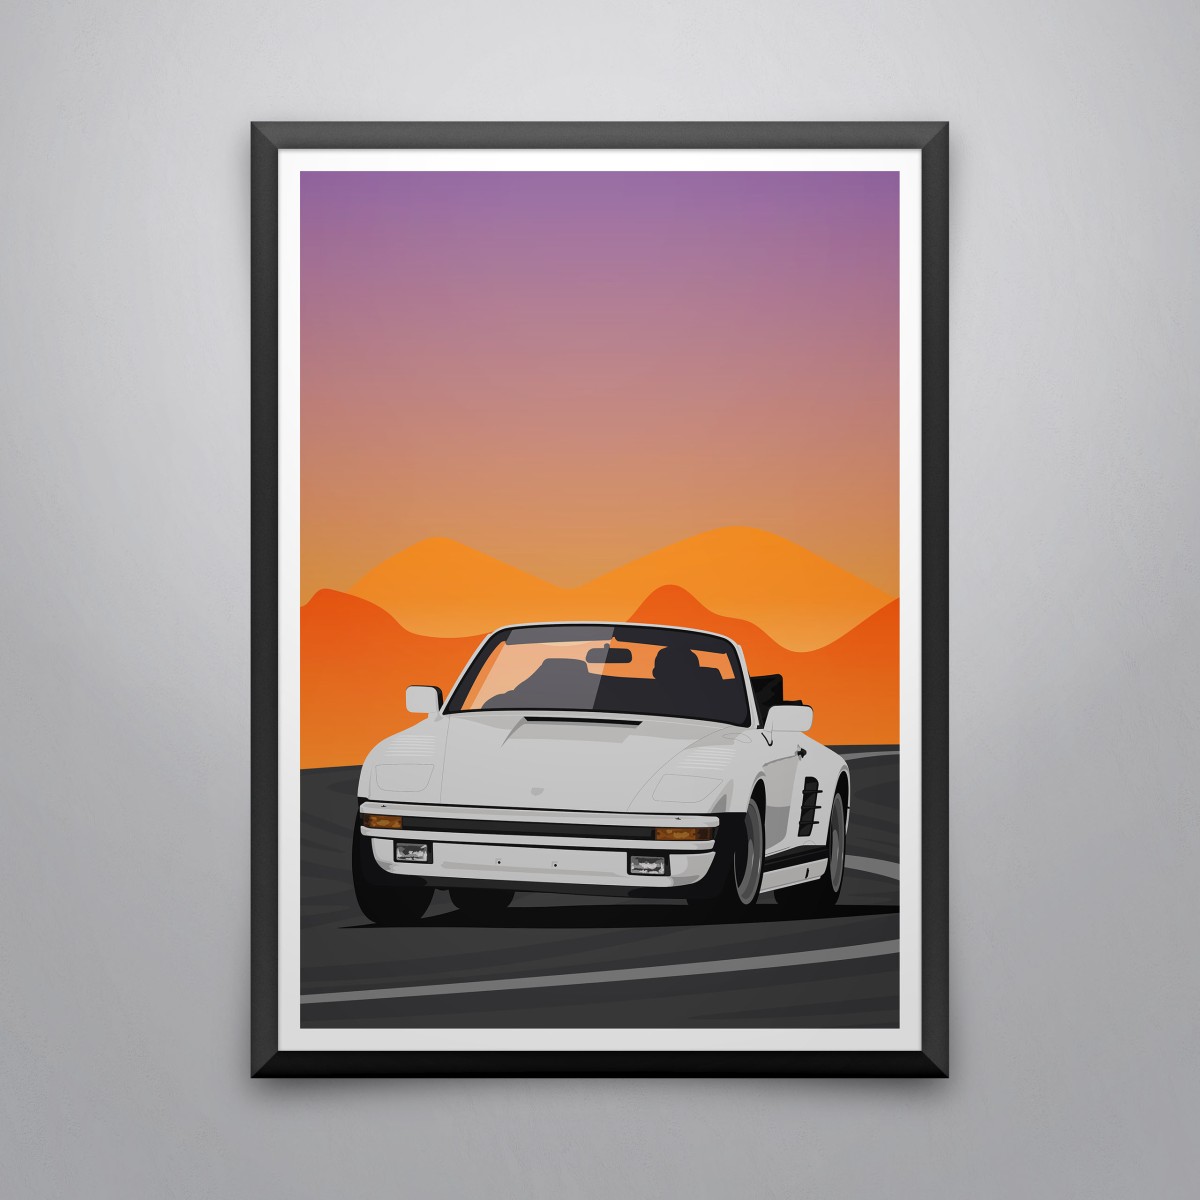 Porsche 911. Flachbau Cabrio - Automotive Prints